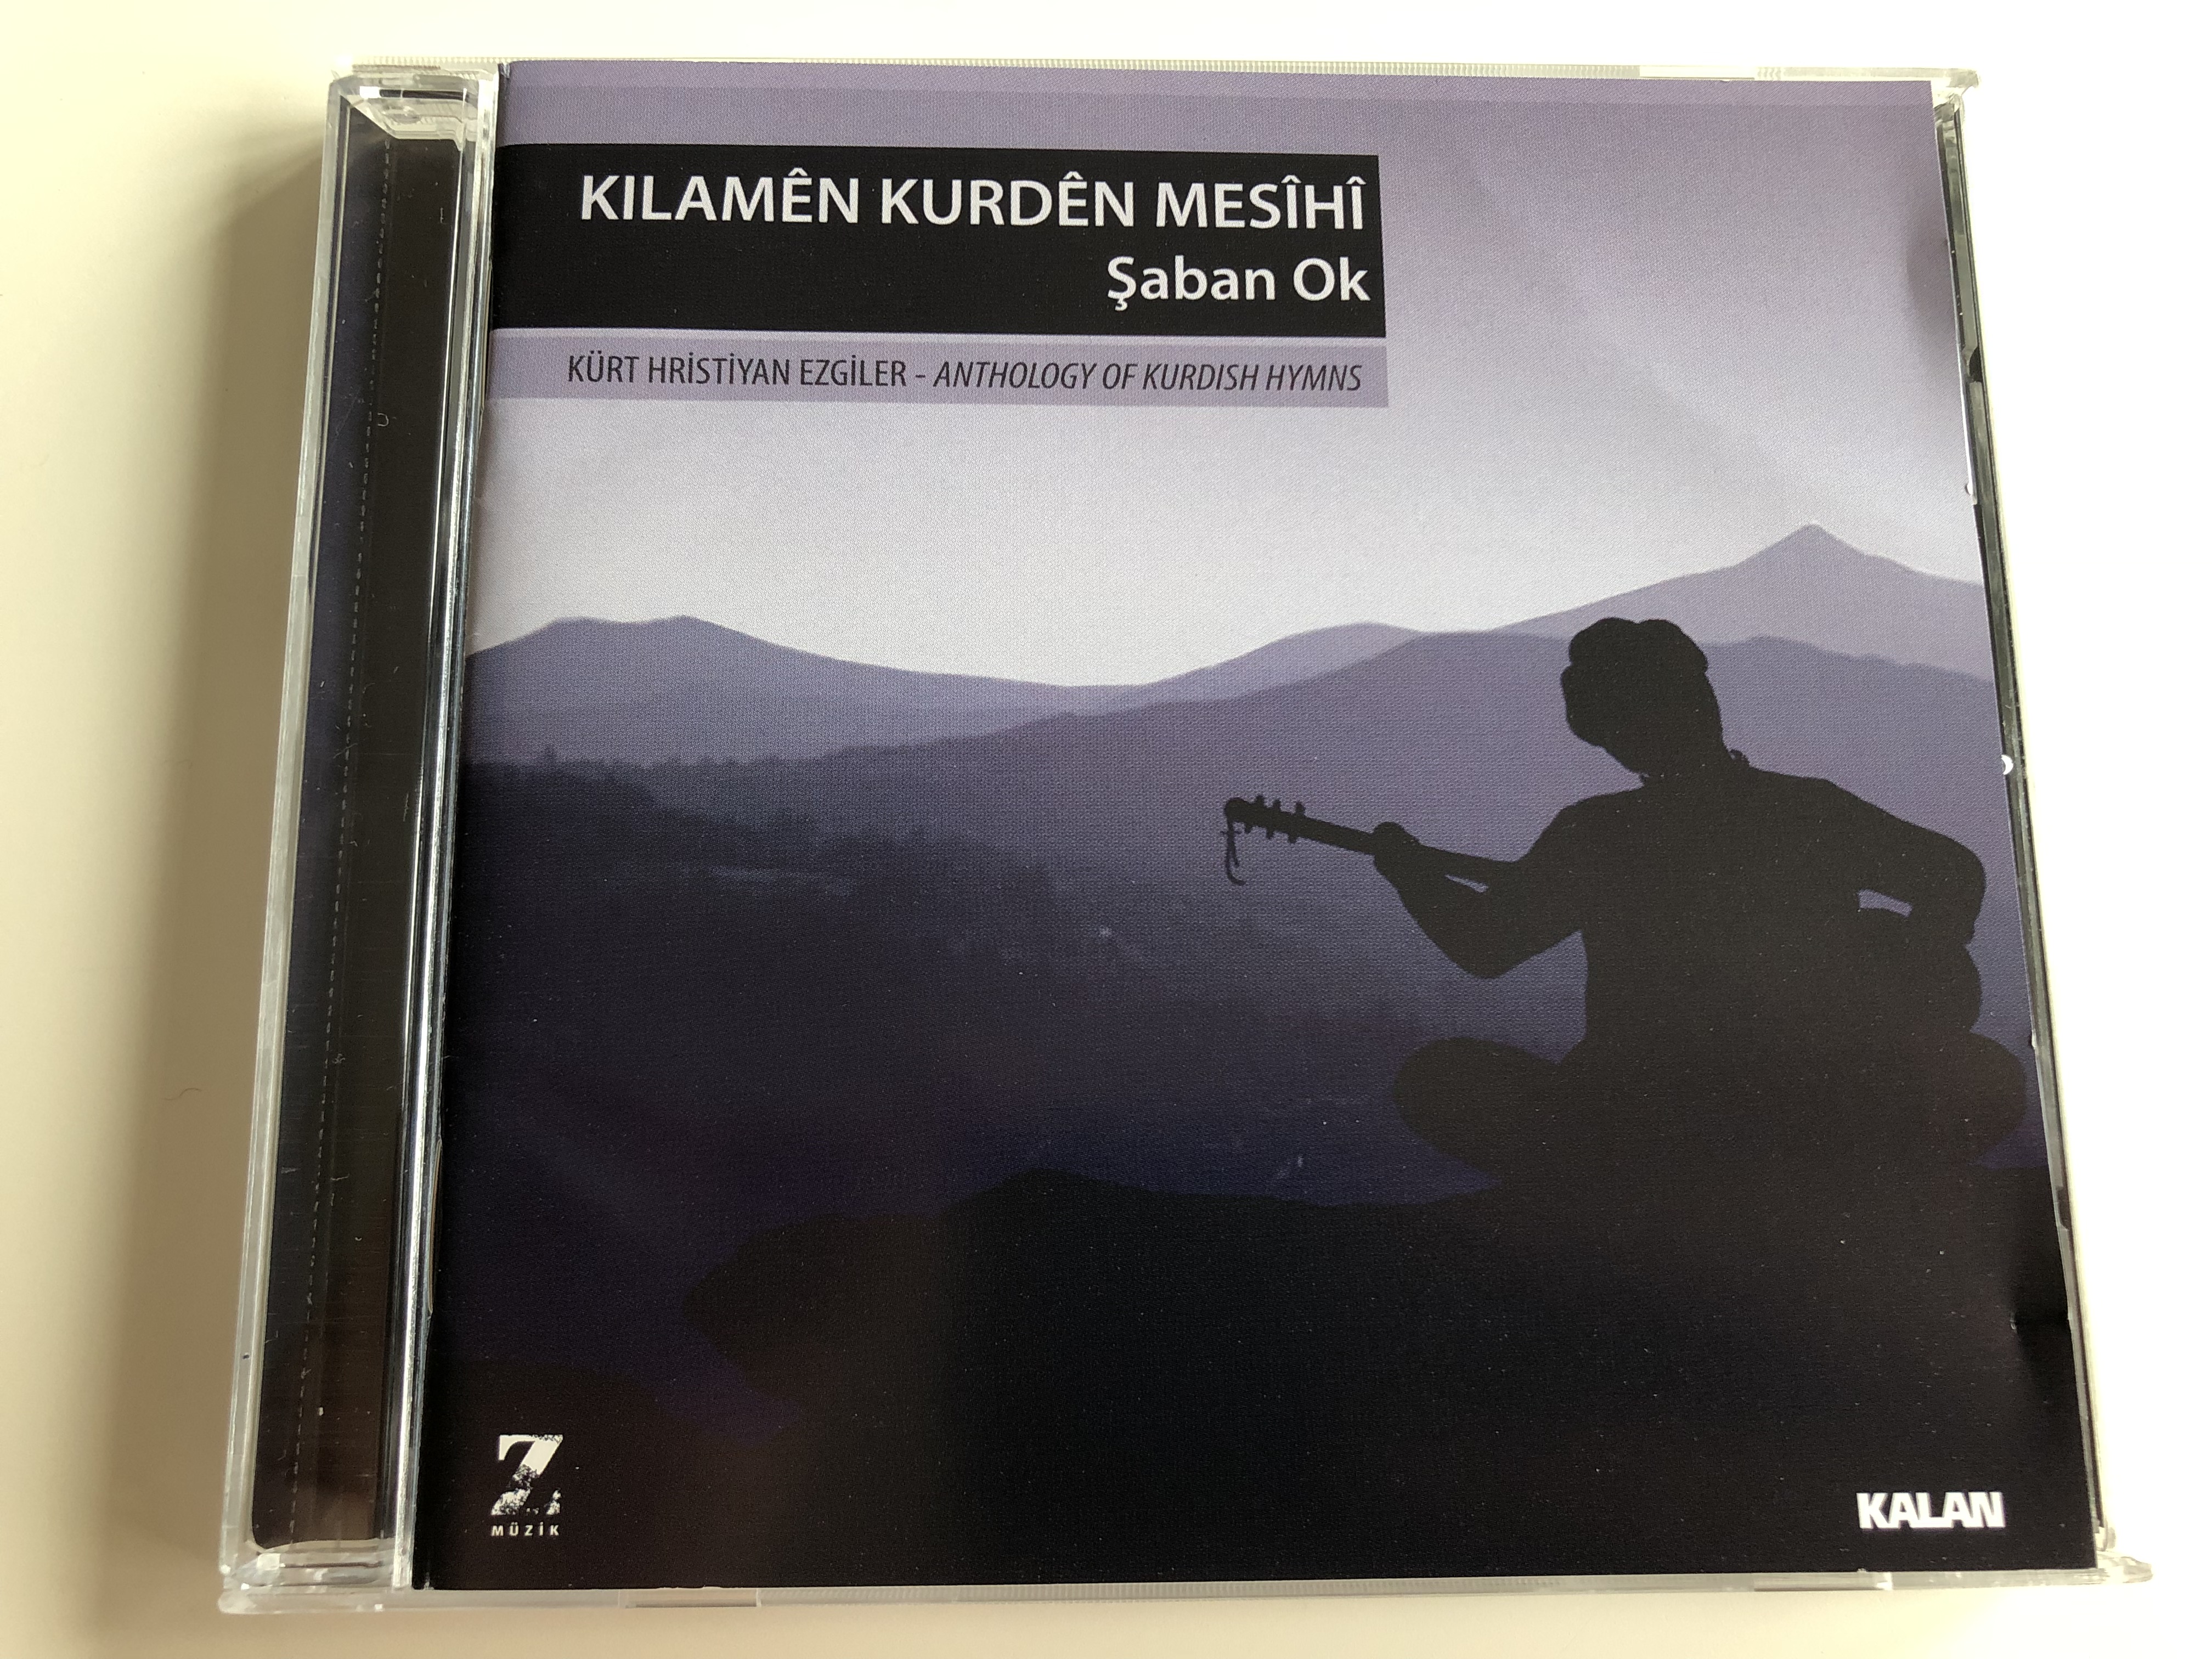 k-rt-hr-st-yan-ezg-ler-cd-aban-ok-anthology-of-kurdish-hymns-turkish-cd-2013-1-.jpg